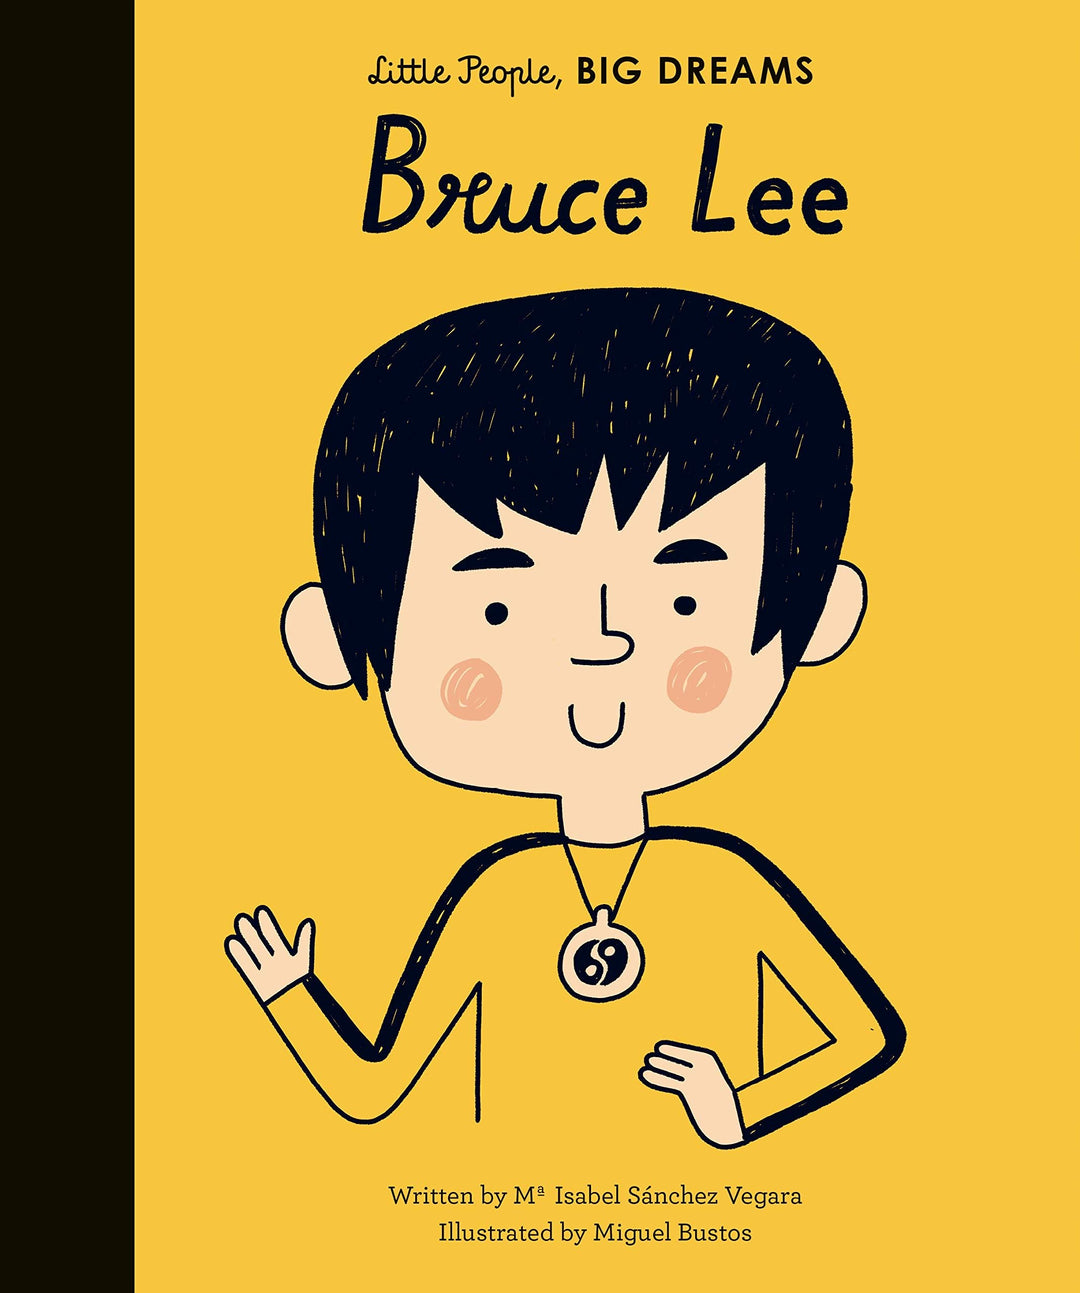 LITTLE PEOPLE BIG DREAMS DREAMS | BRUCE LEE BOOK